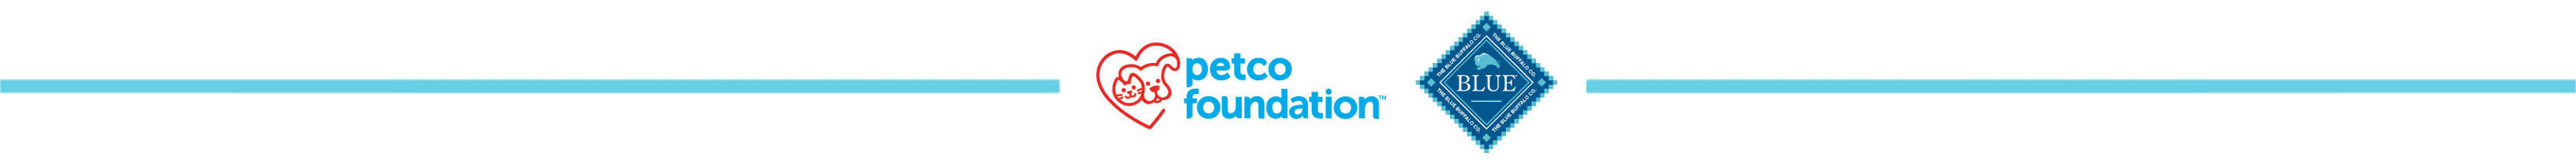 Petco Foundation & Blue Buffalo Company